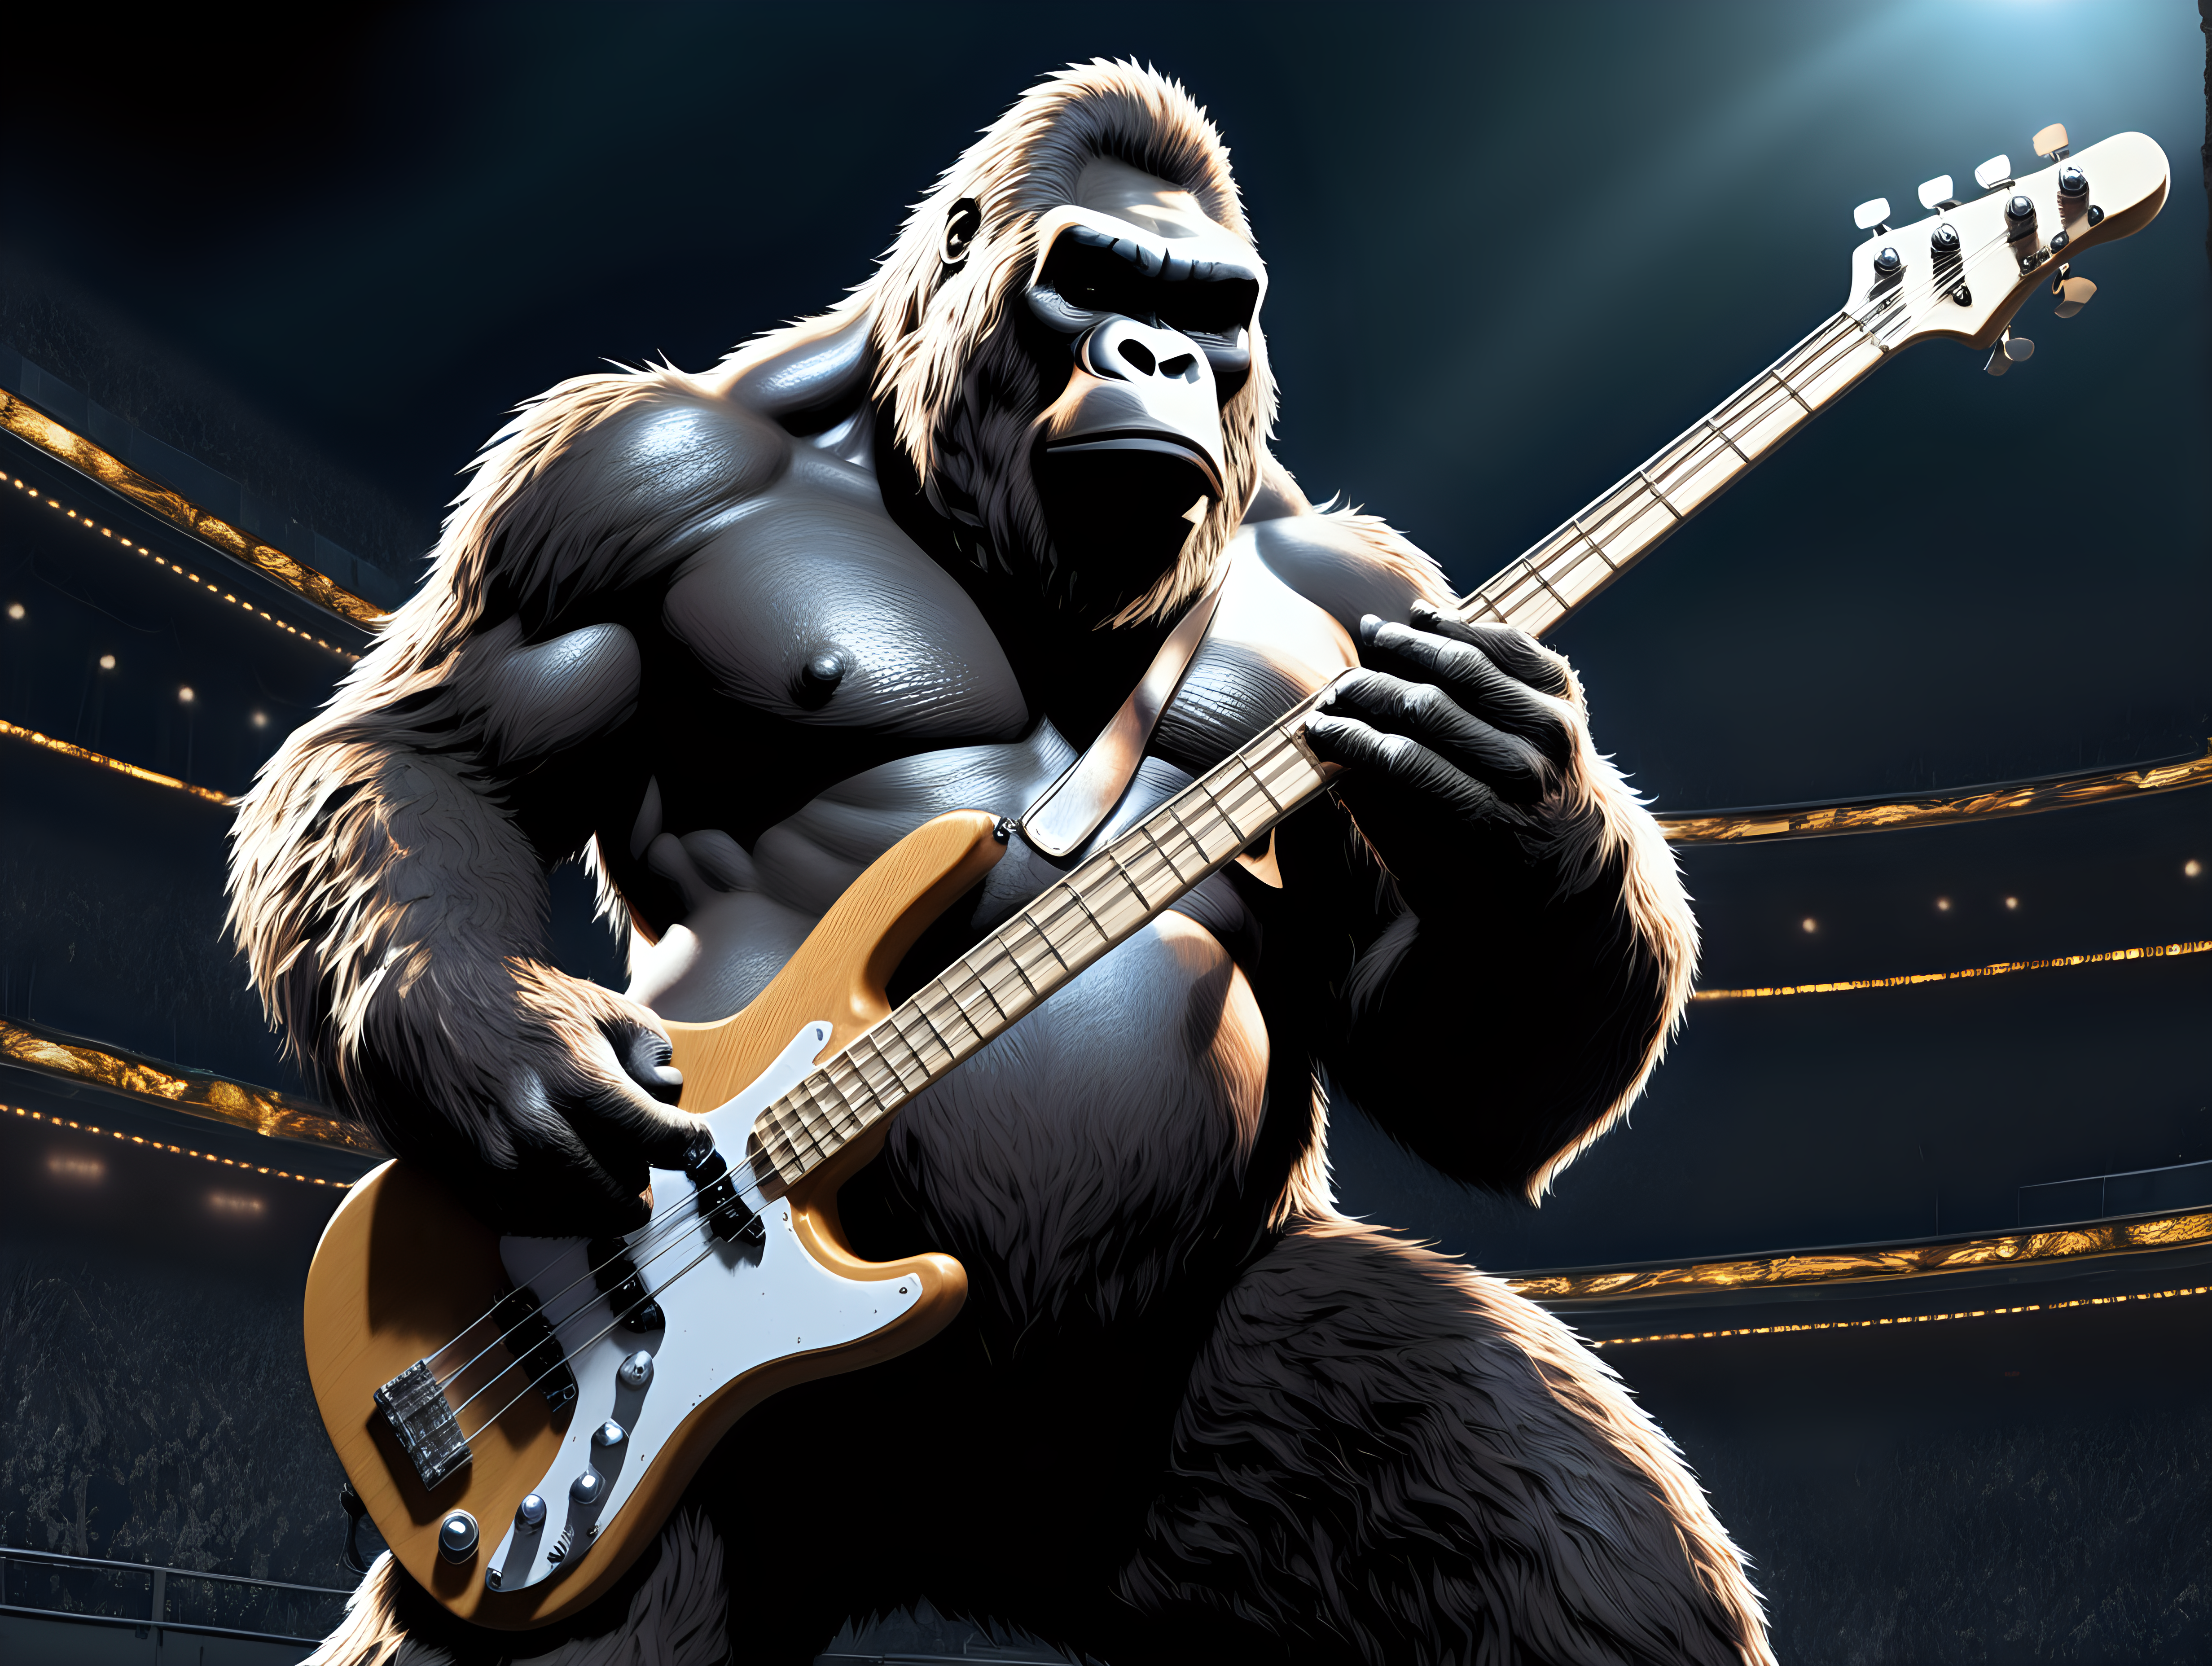 King Kong playing bass guitar in an arena